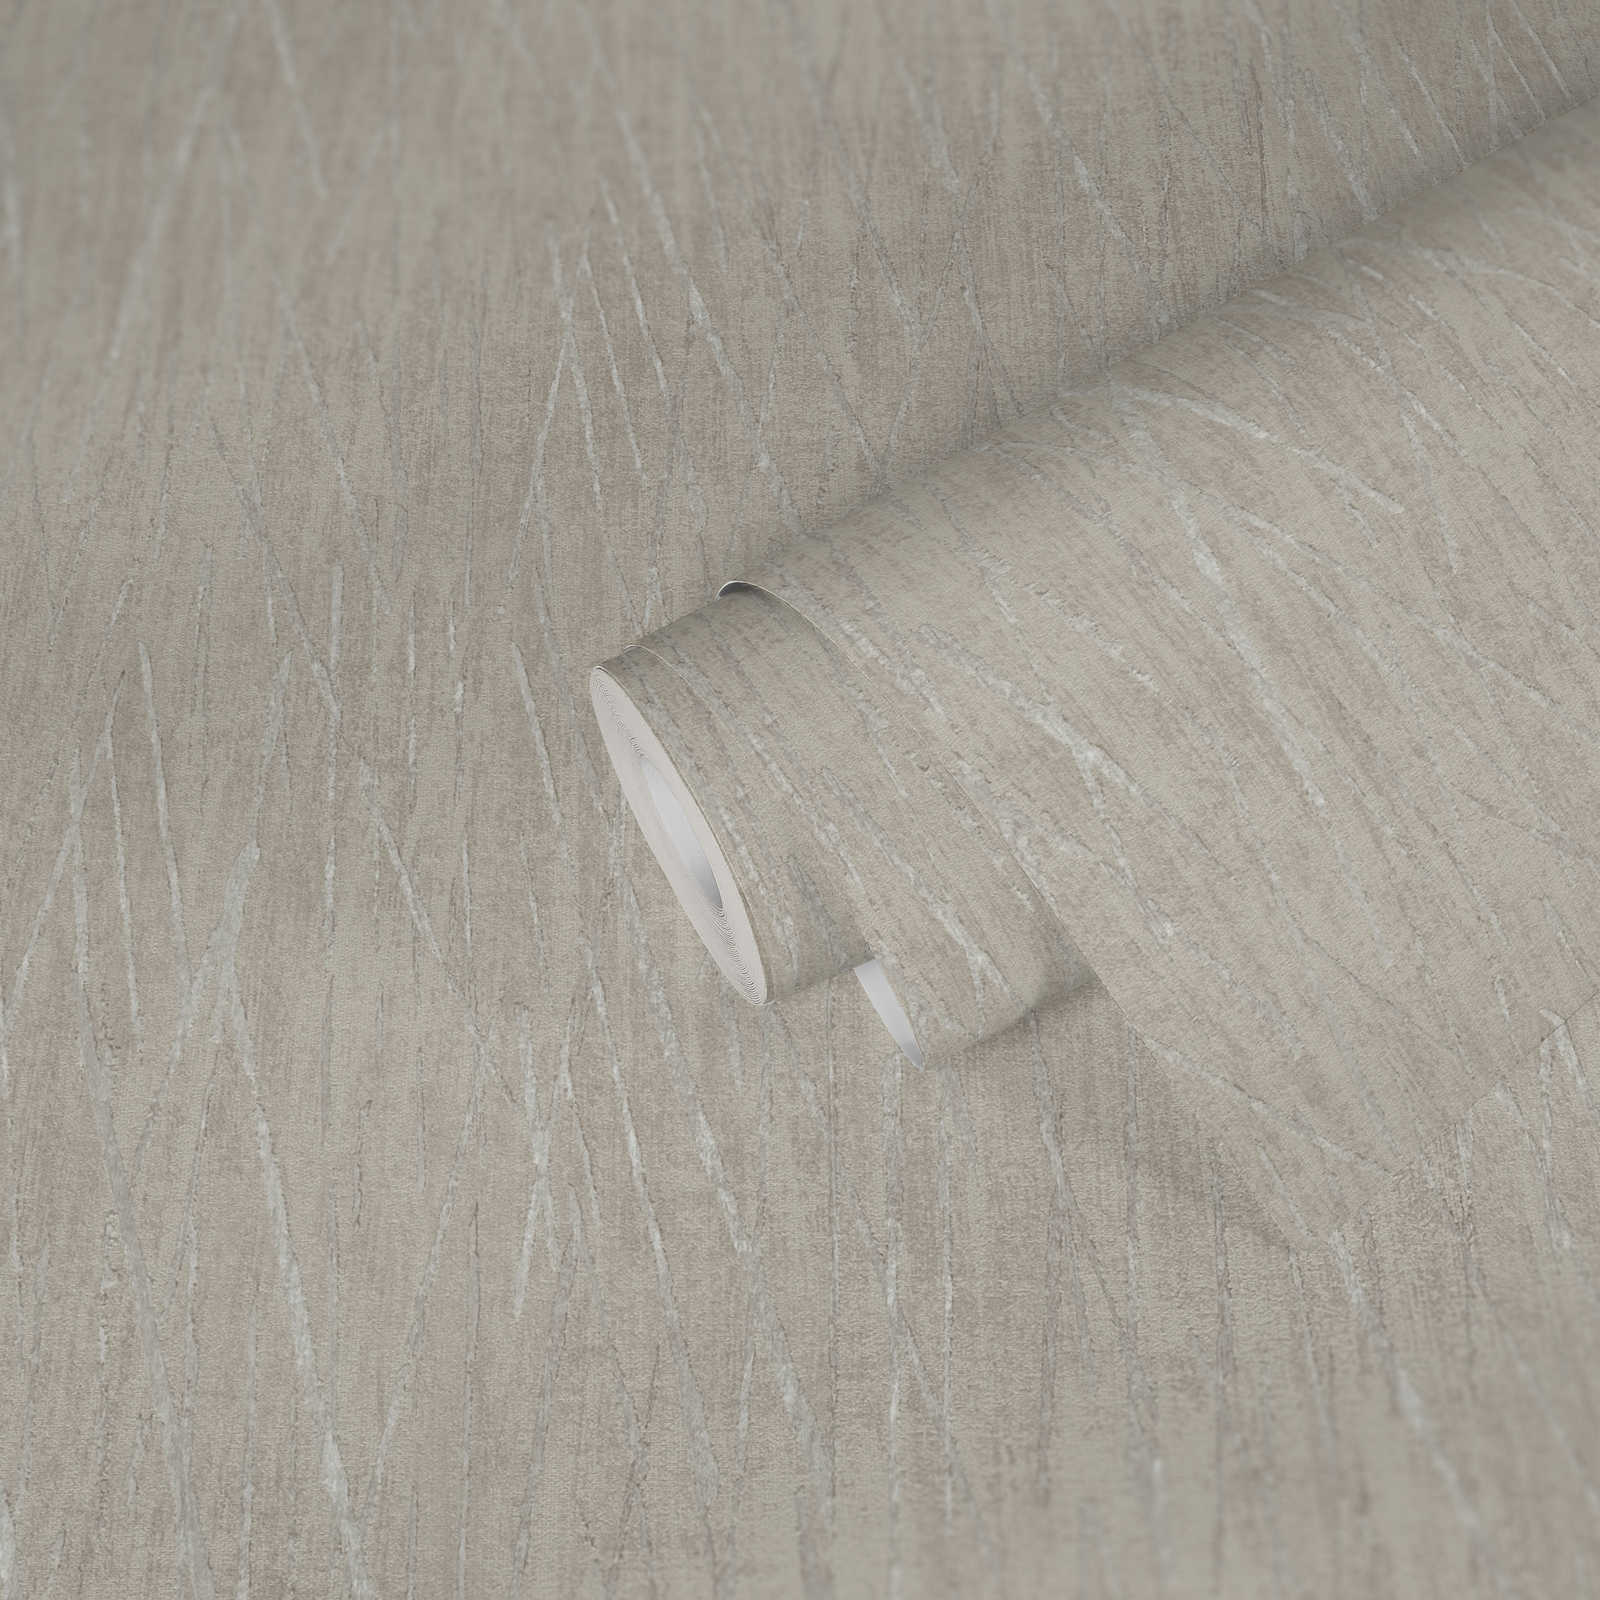             Skandinavische Tapete mit Metallic Design – Grau, Metallic
        